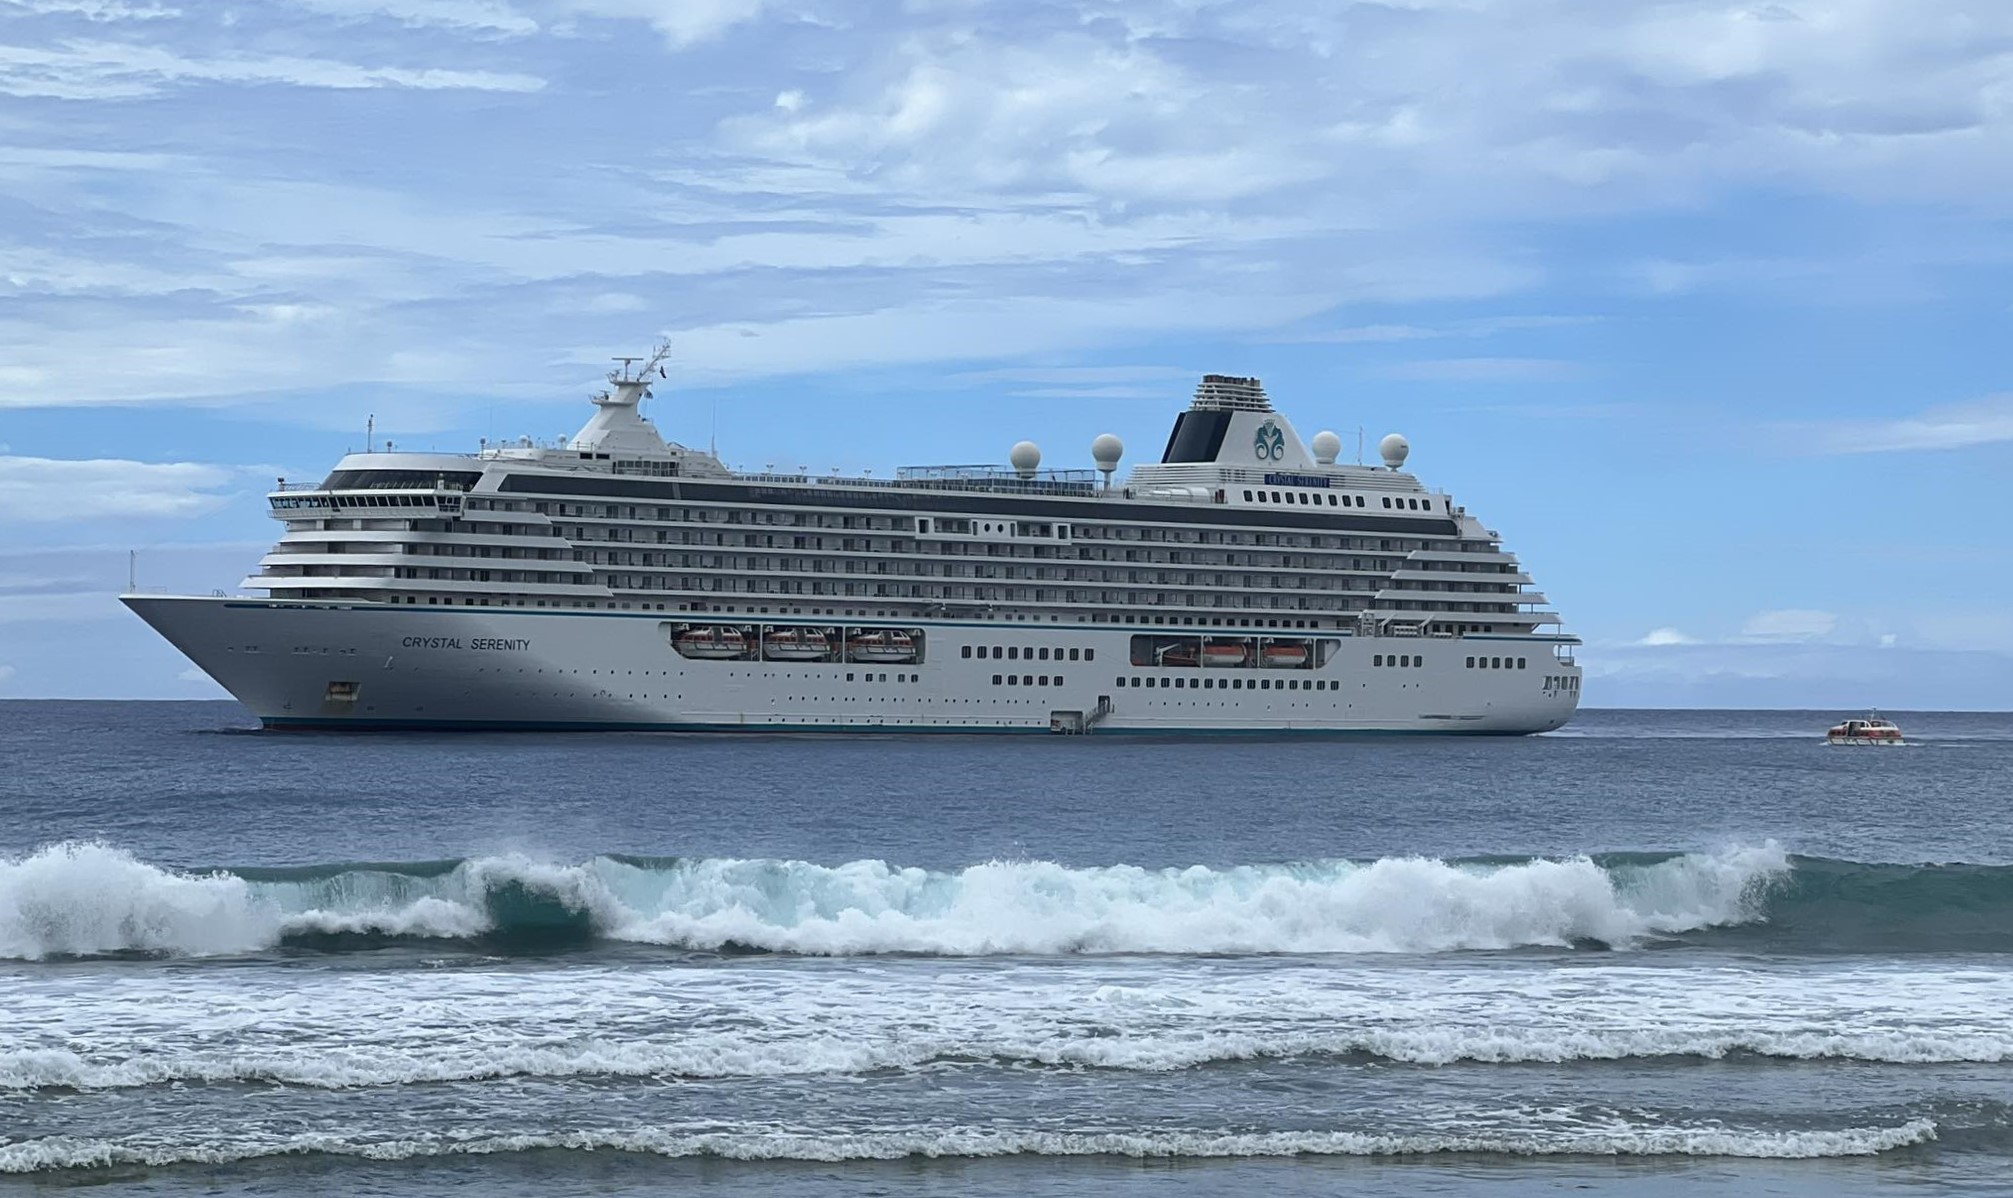 Rarotonga welcomes cruise passengers for sightseeing and shopping